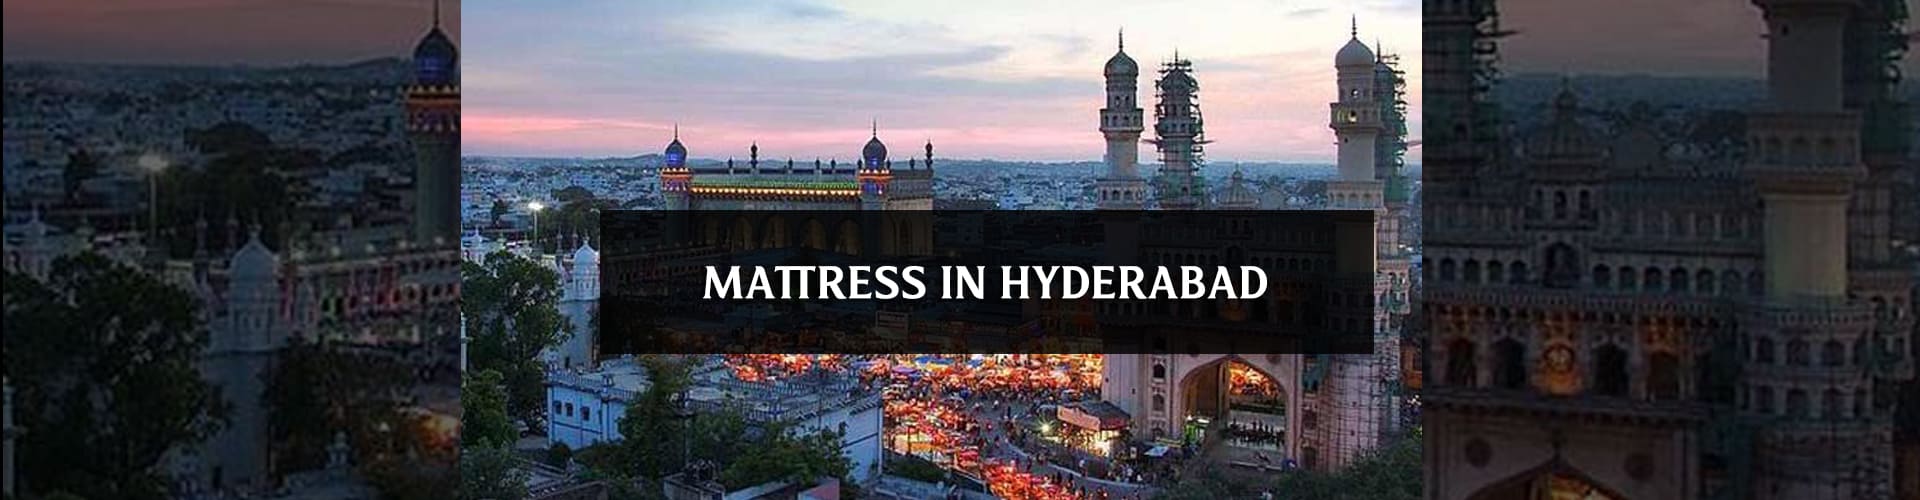 Buy mattress online in hyderabad